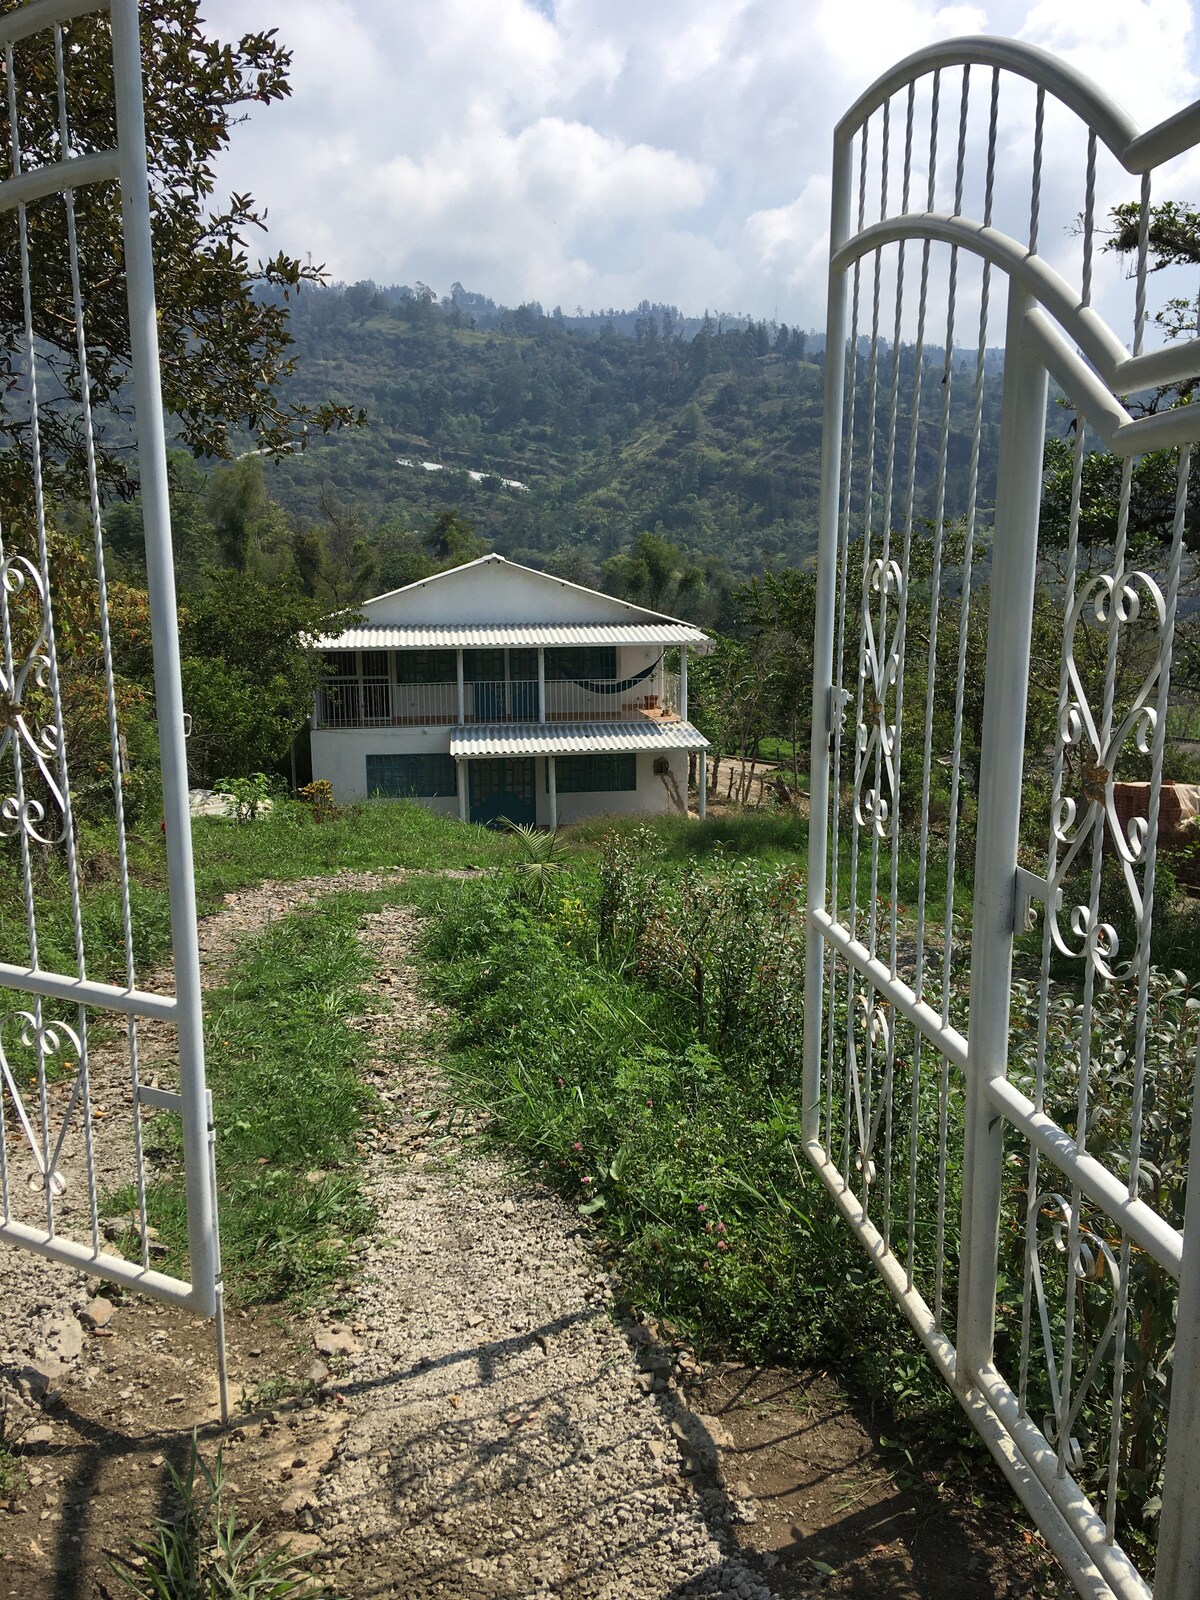 Countryside home in Tenza Valley, Boyacá